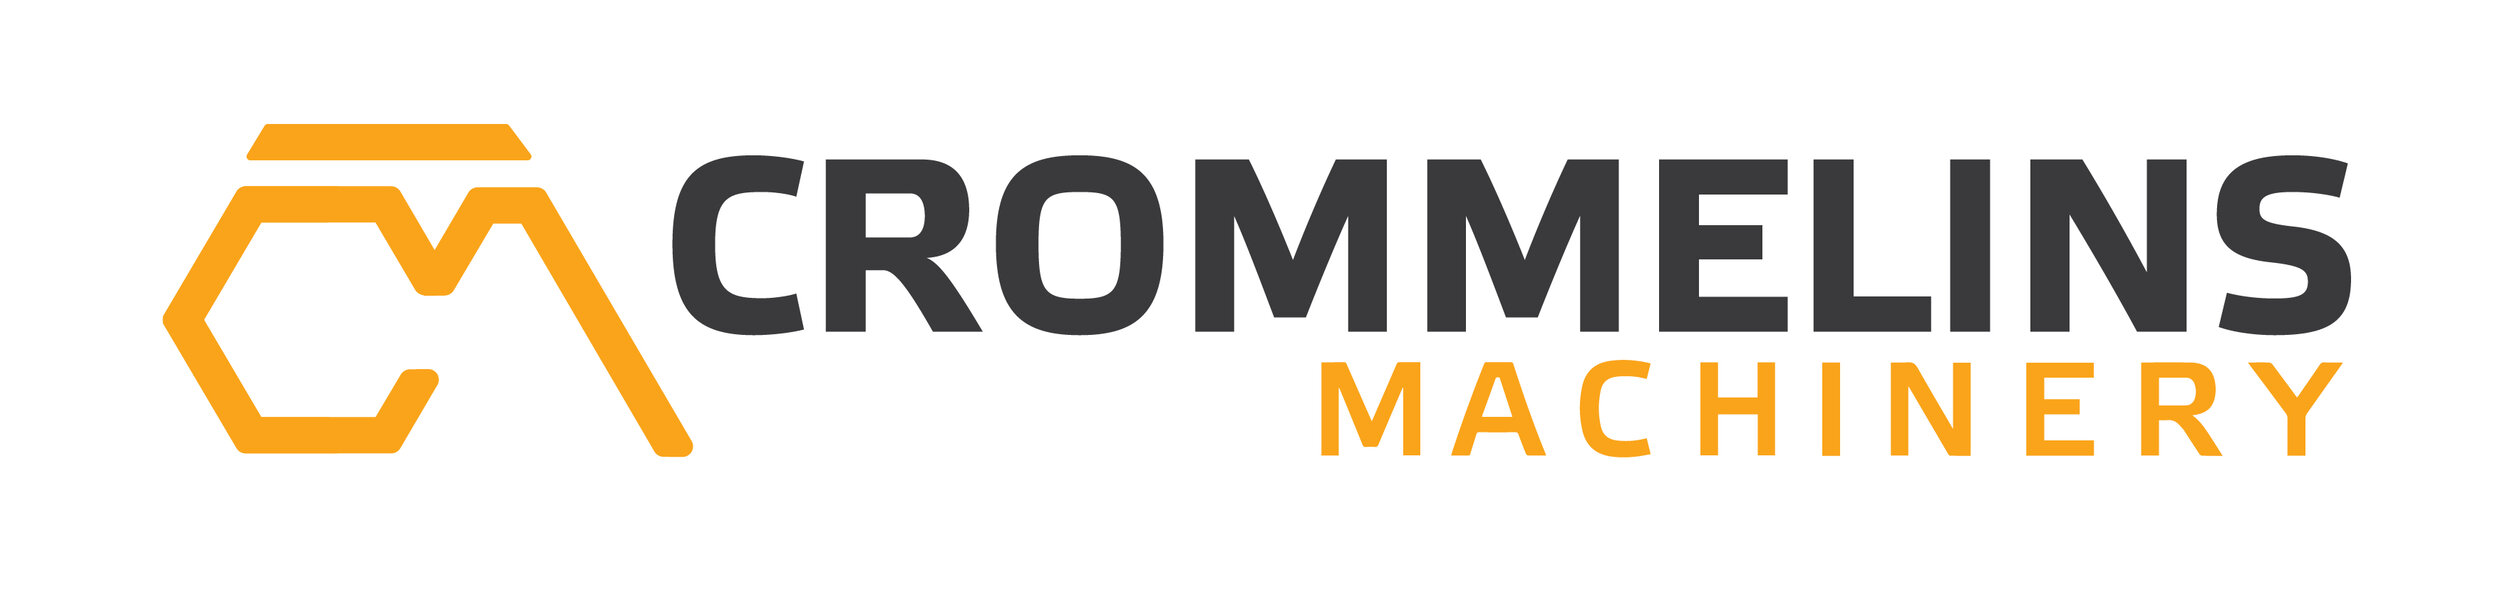 Crommelins Machinery logo white.jpg